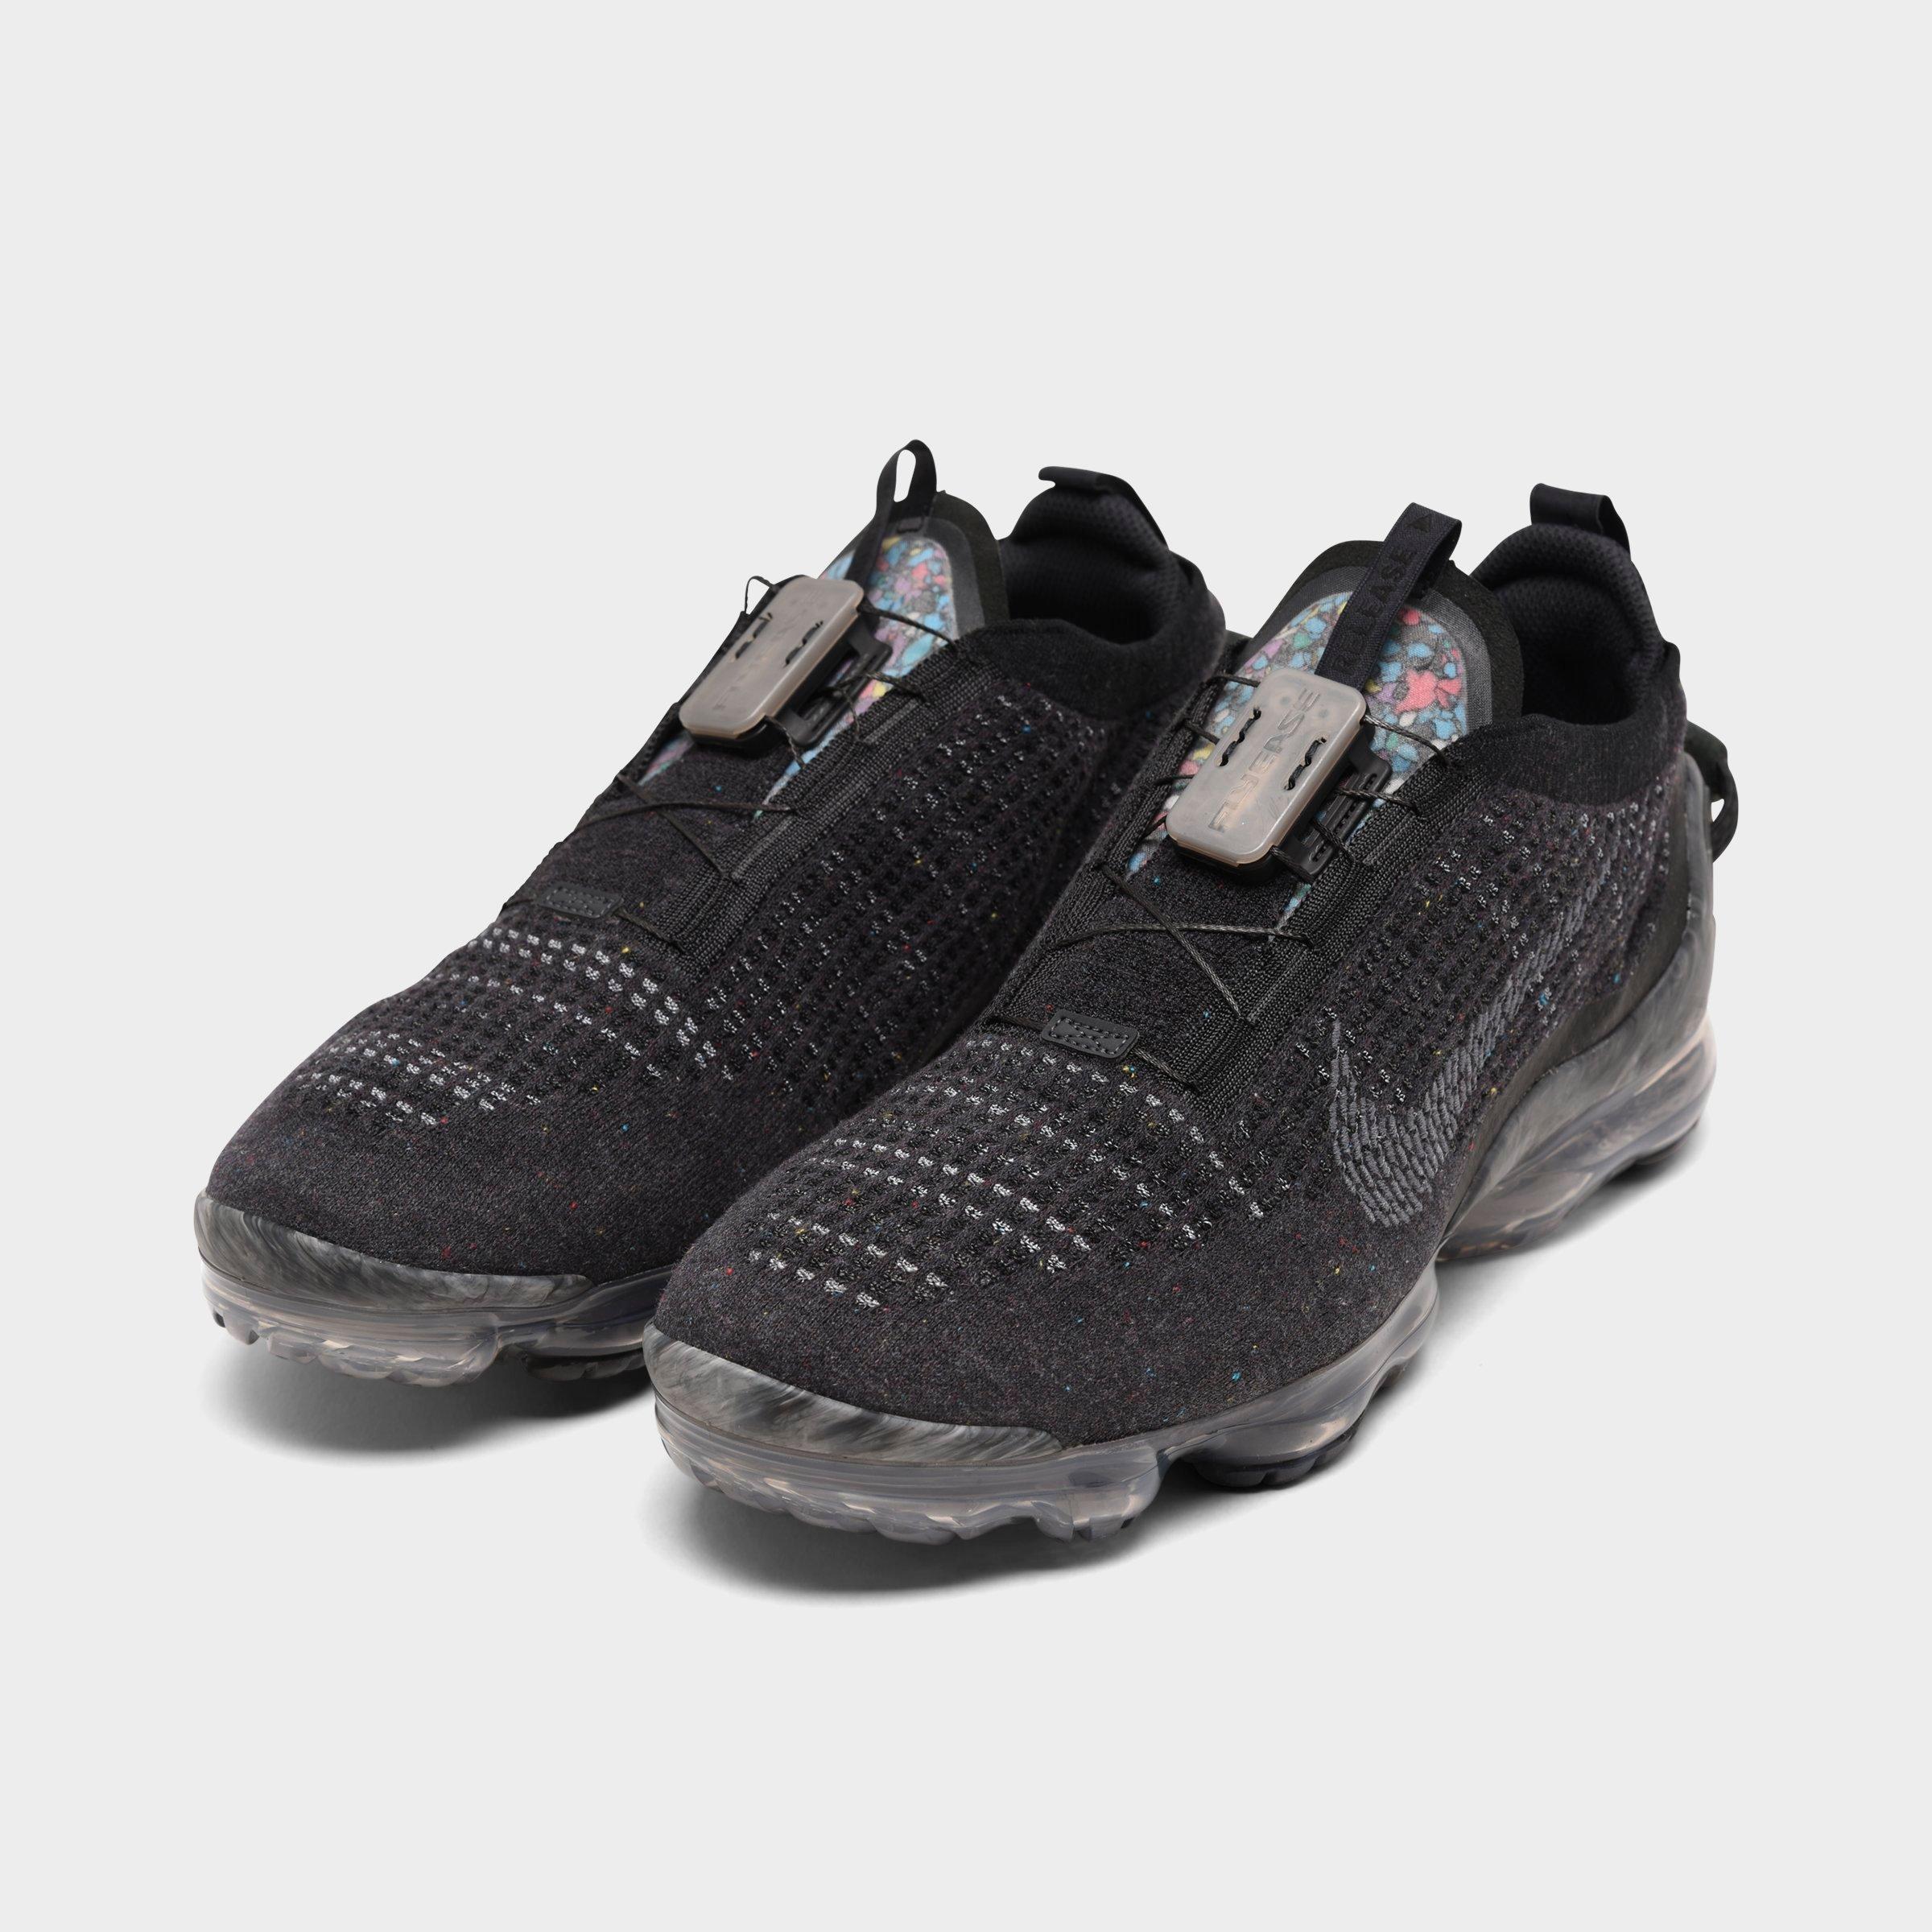 nike men's air vapormax 2020 flyknit shoes